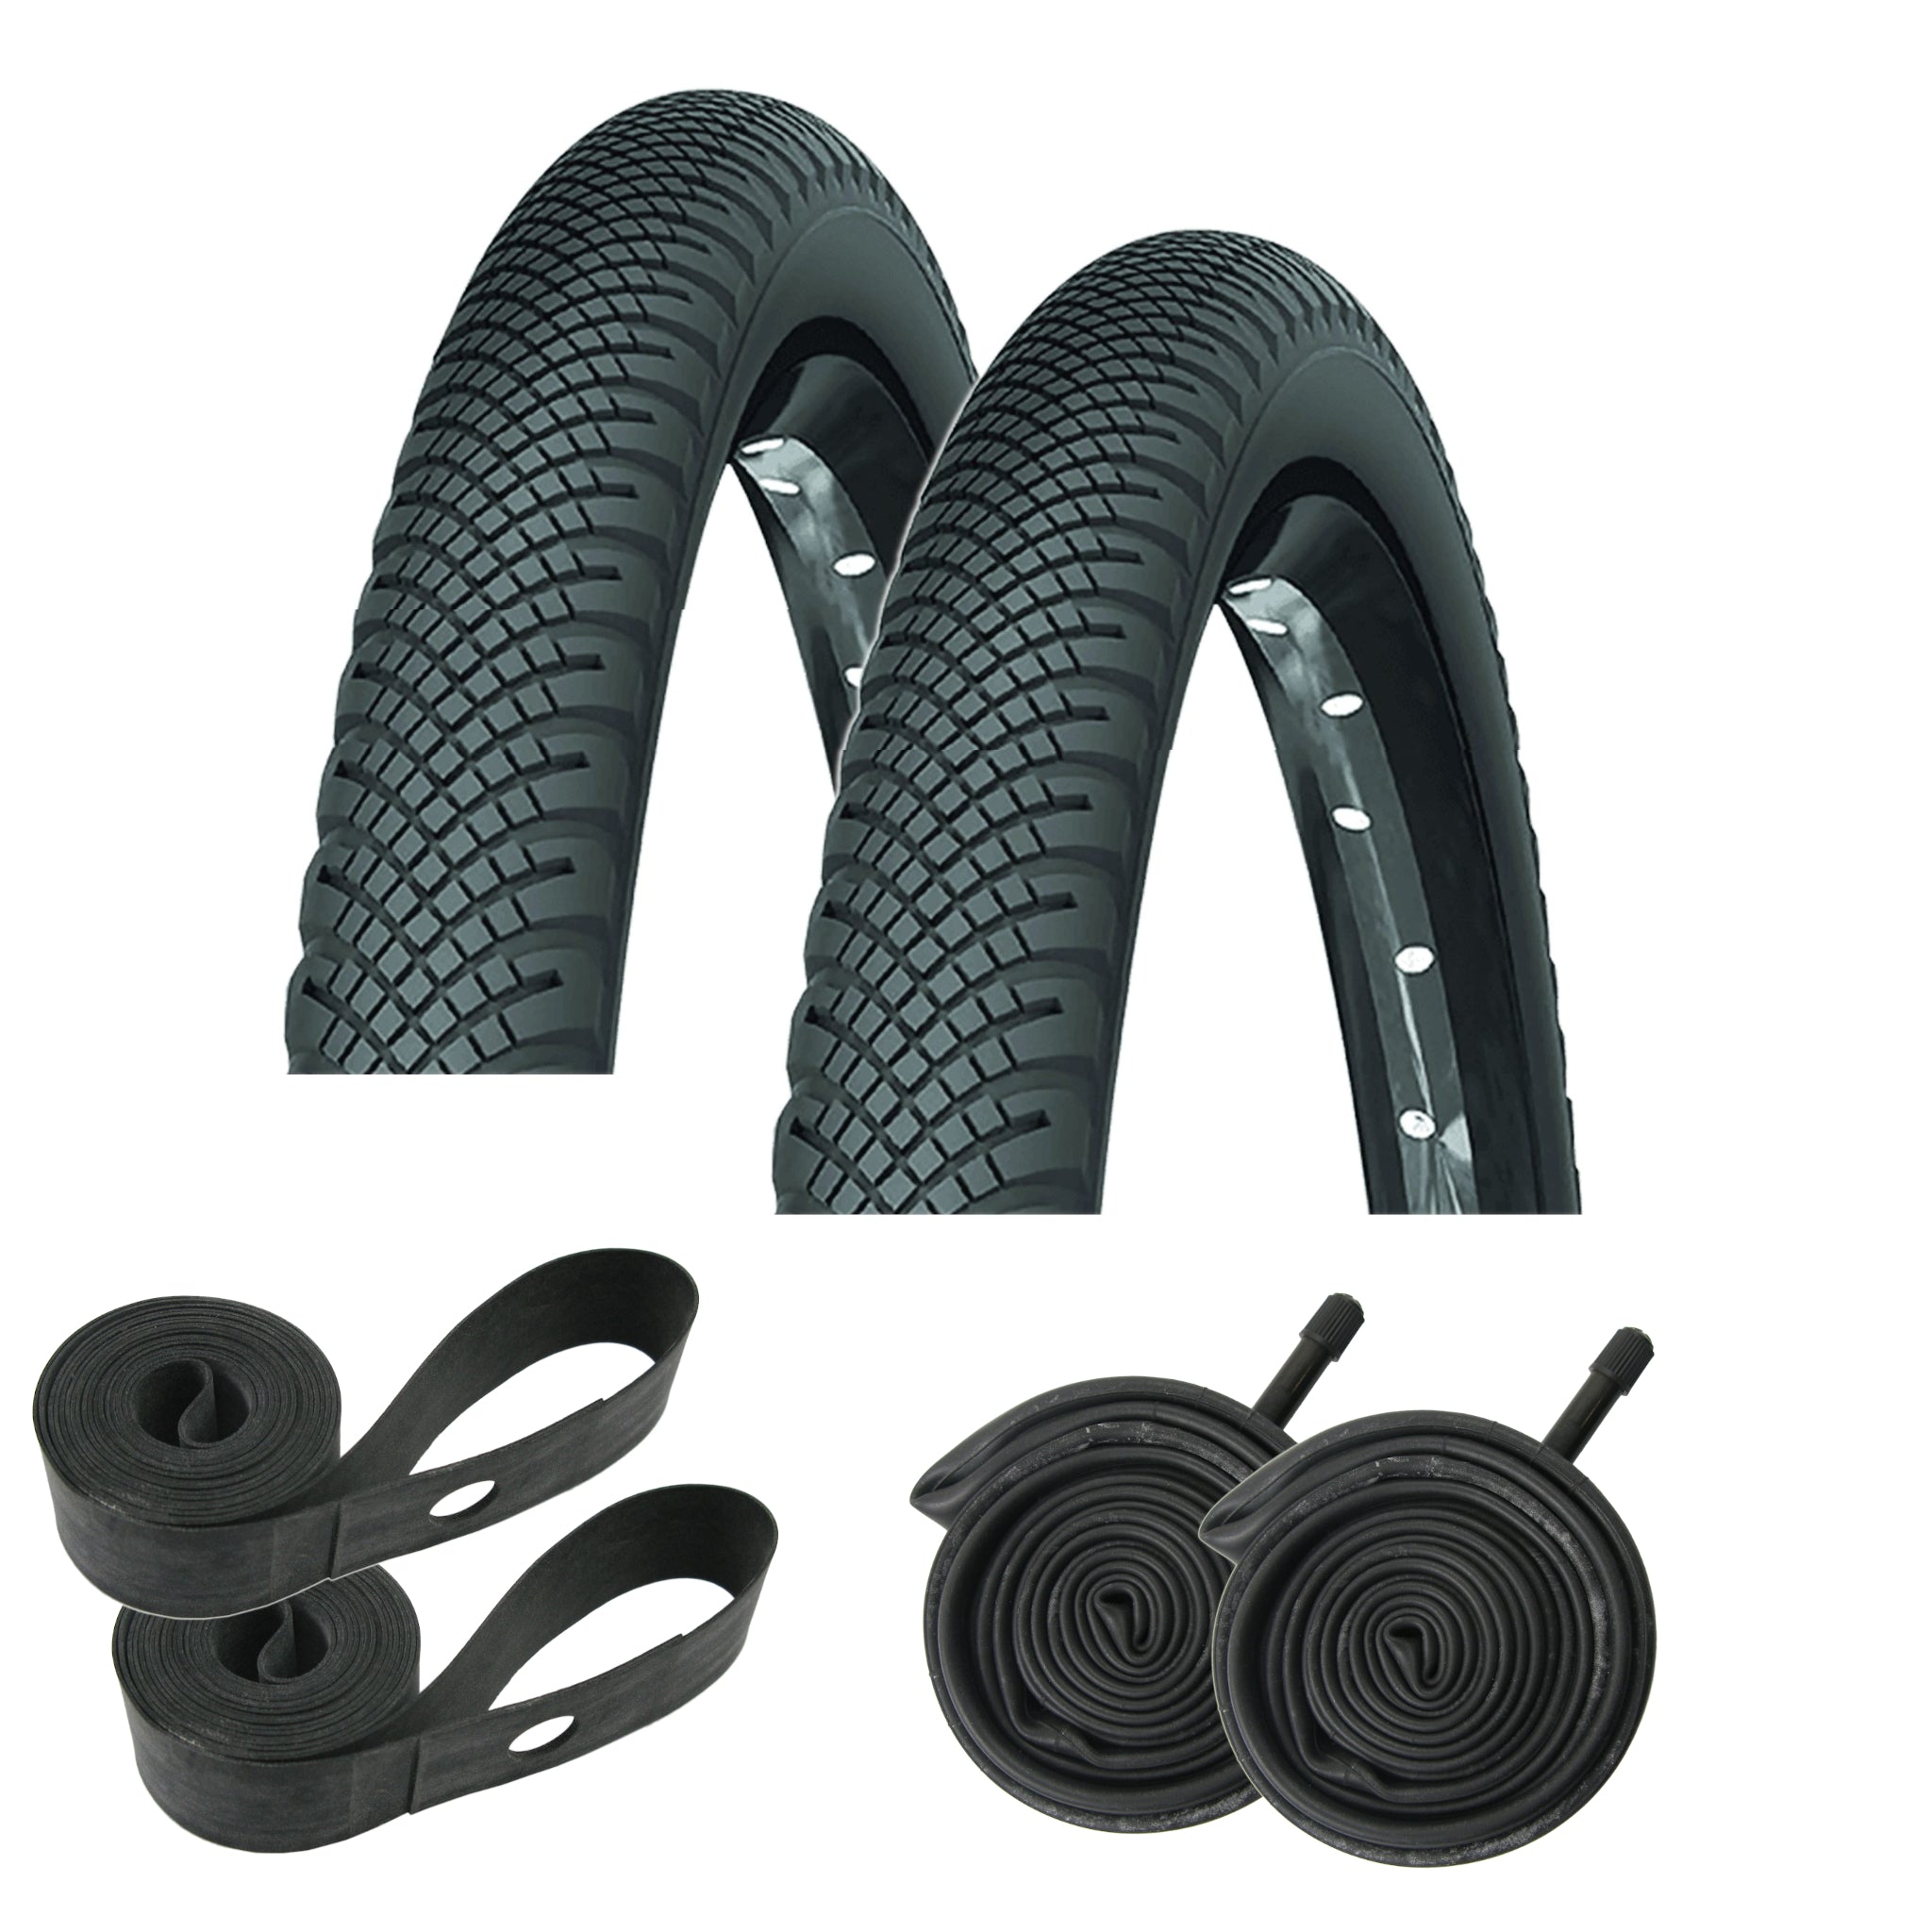 Michelin Country Rock 26x1.75 Schrader Valve Tire Kit